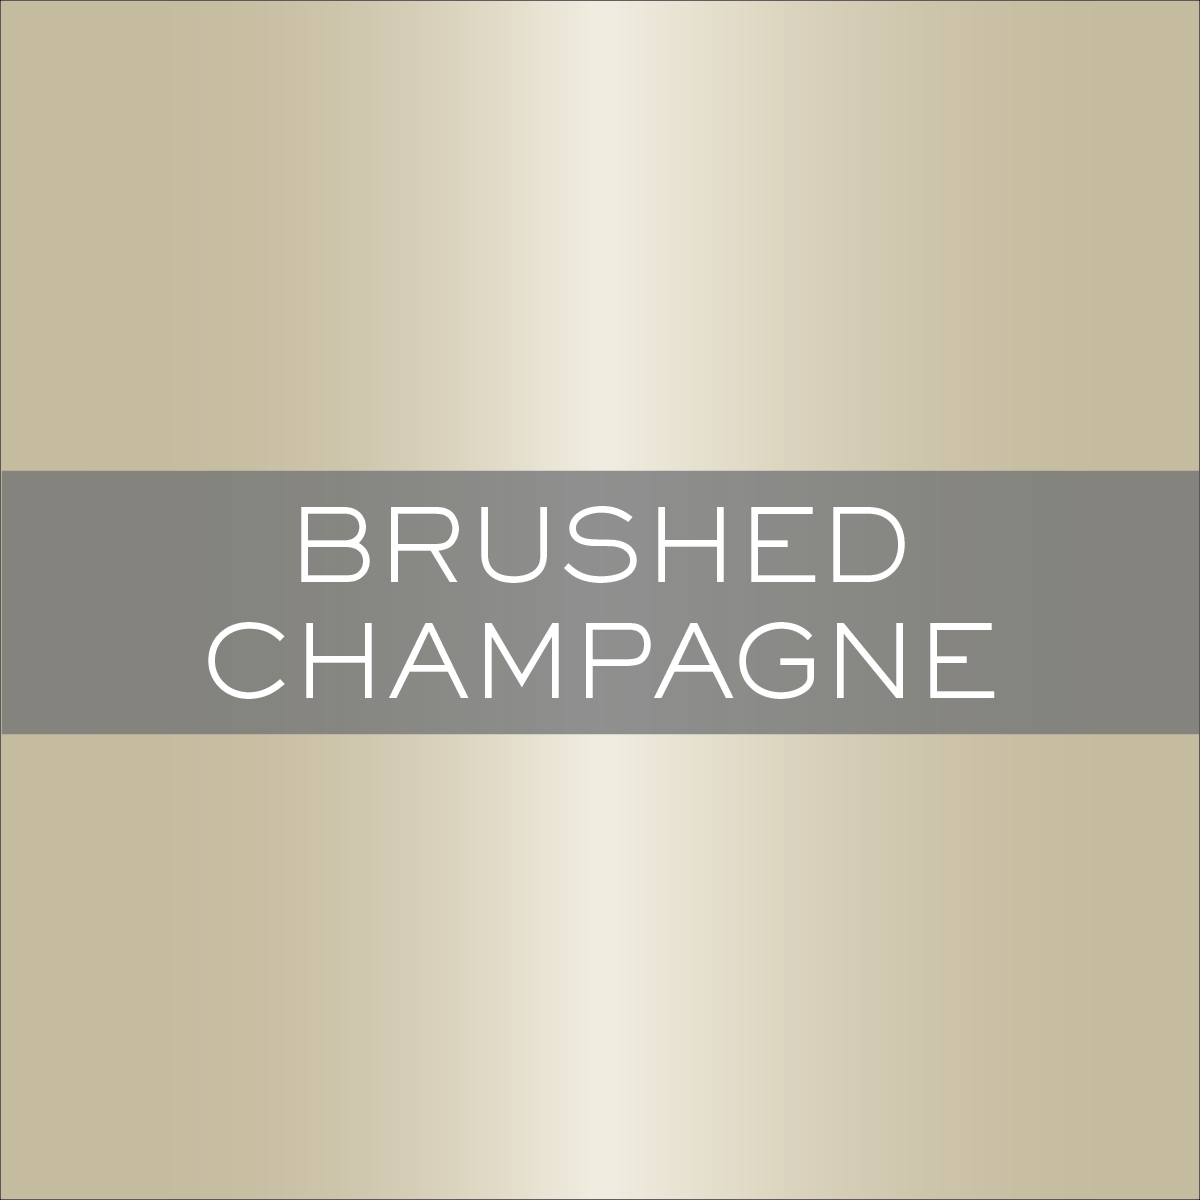 FOIL_Brushed_Champagne.png